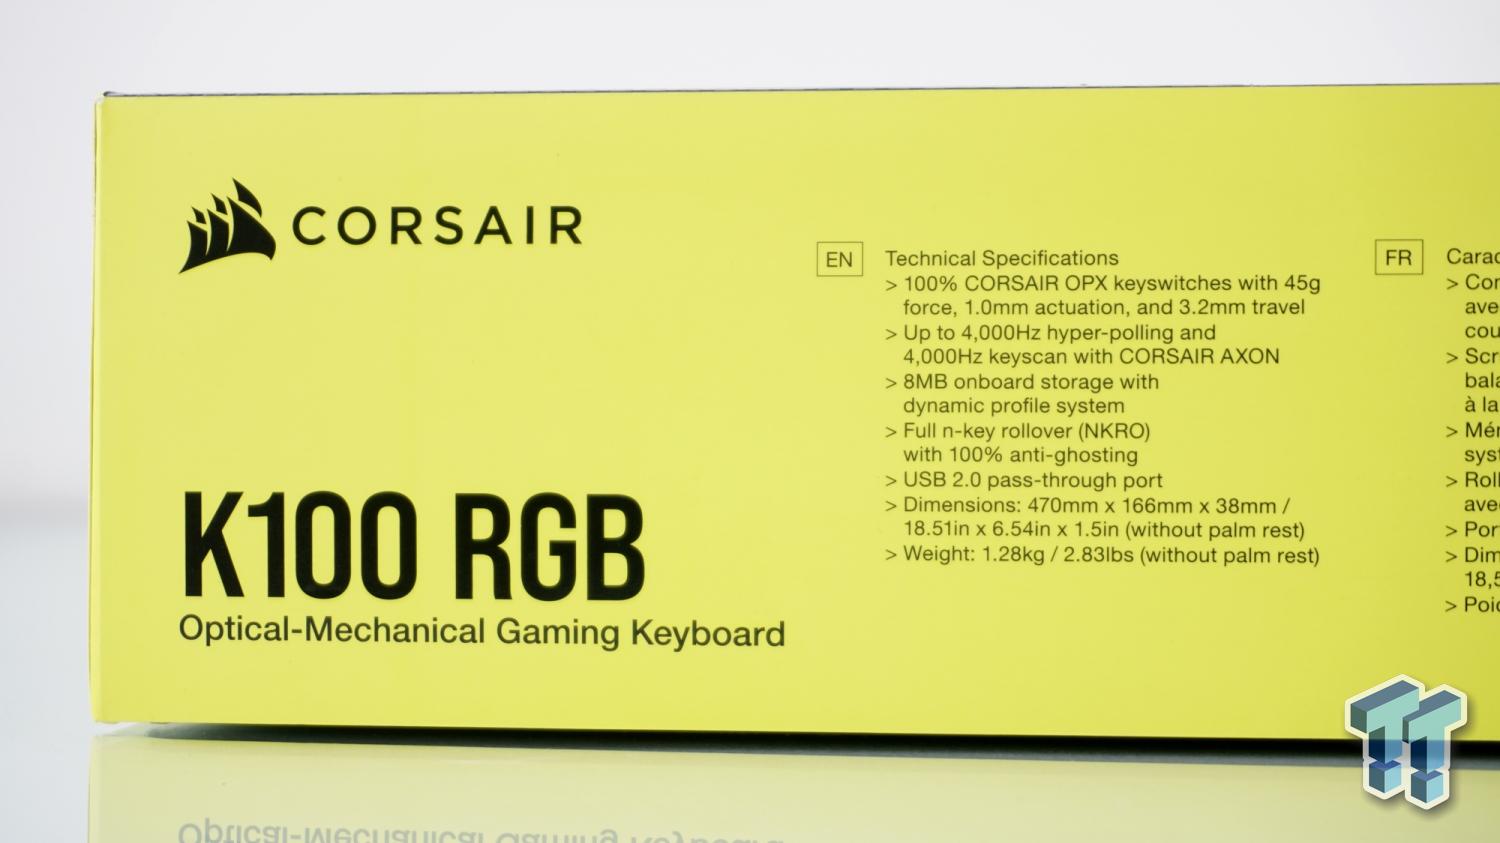 Corsair K100 RGB specifications